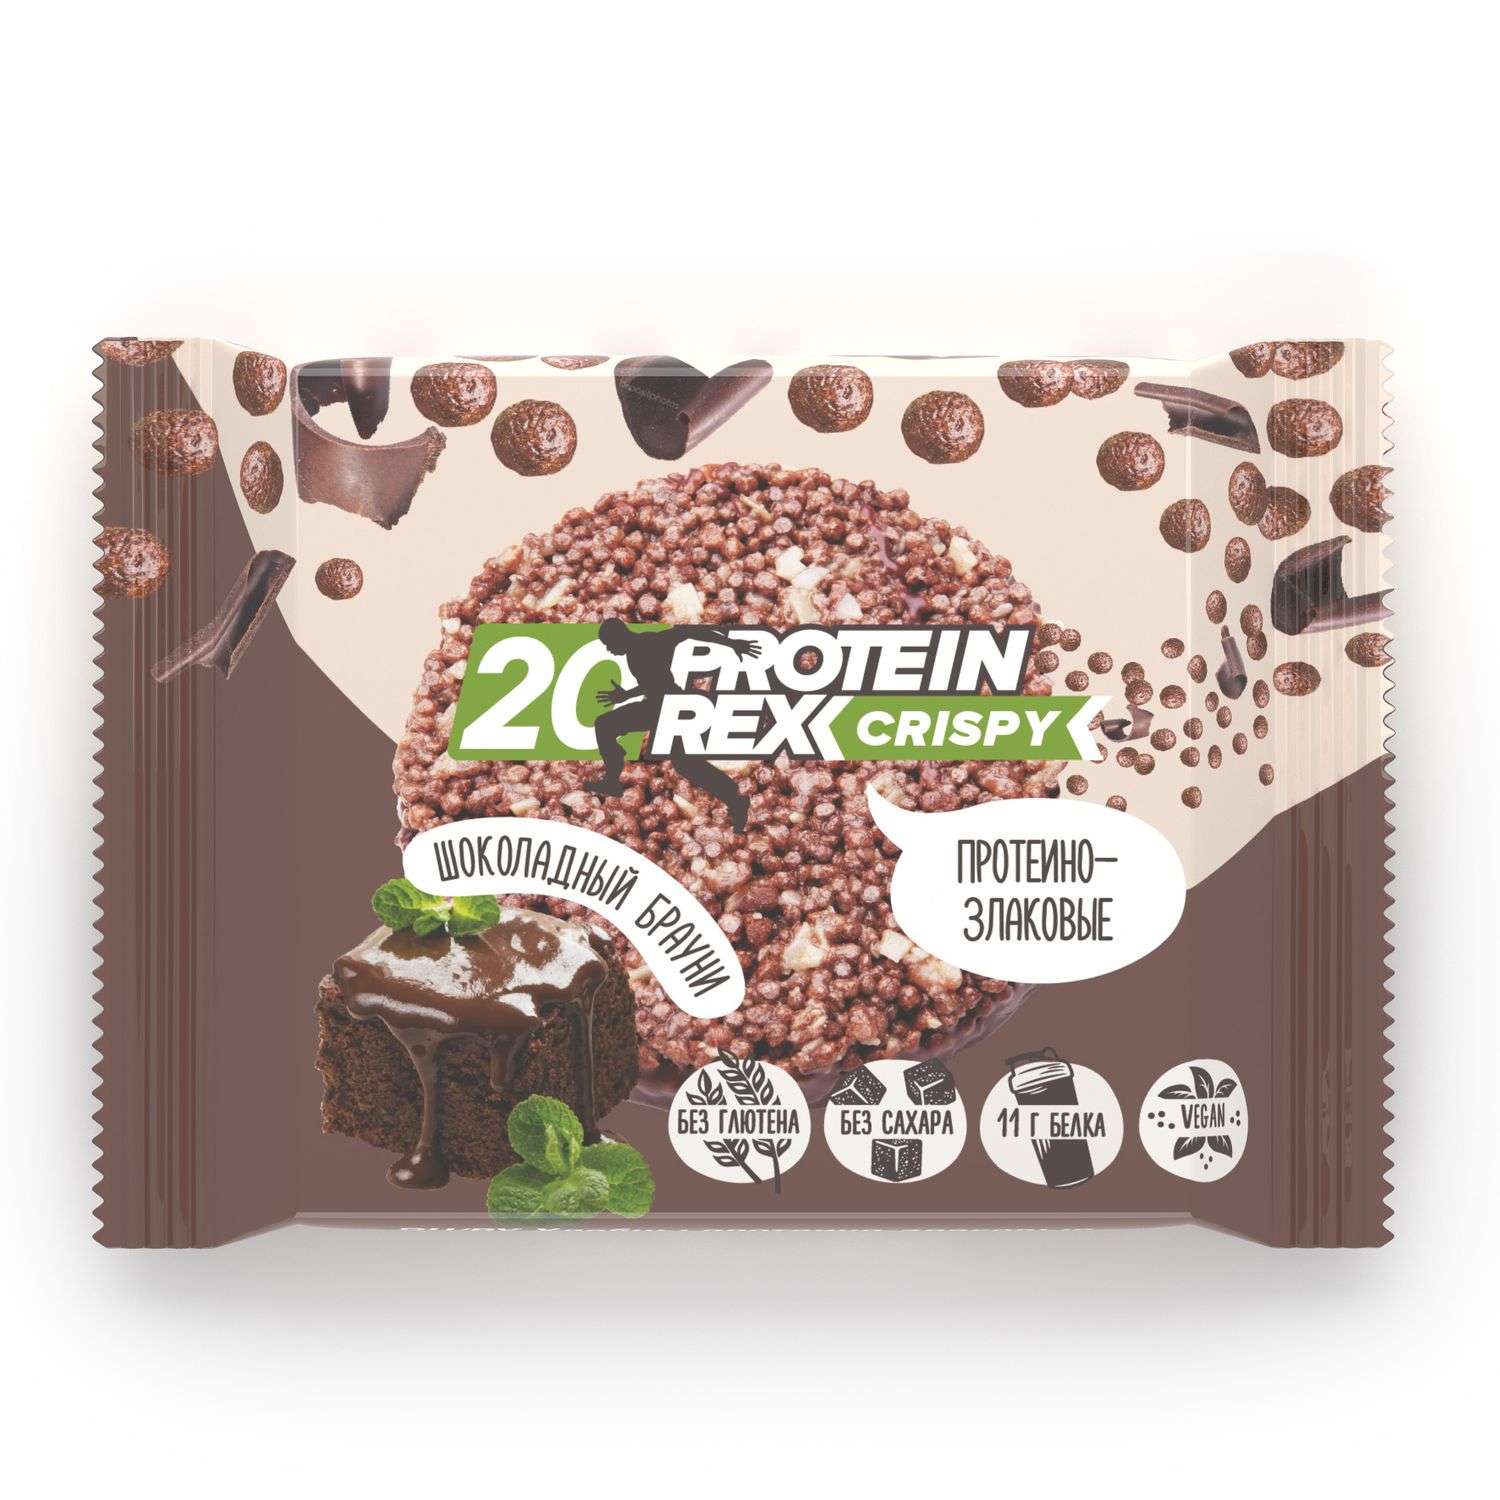 Protein rex брауни. Хлебцы протеино-злаковые Protein Rex. Хлебцы протеиново-злаковые Protein Rex (55 г) (шоколадный Брауни). Protein Rex Crispy 55%. Хлебцы PROTEINREX 55г шоколадный Брауни.